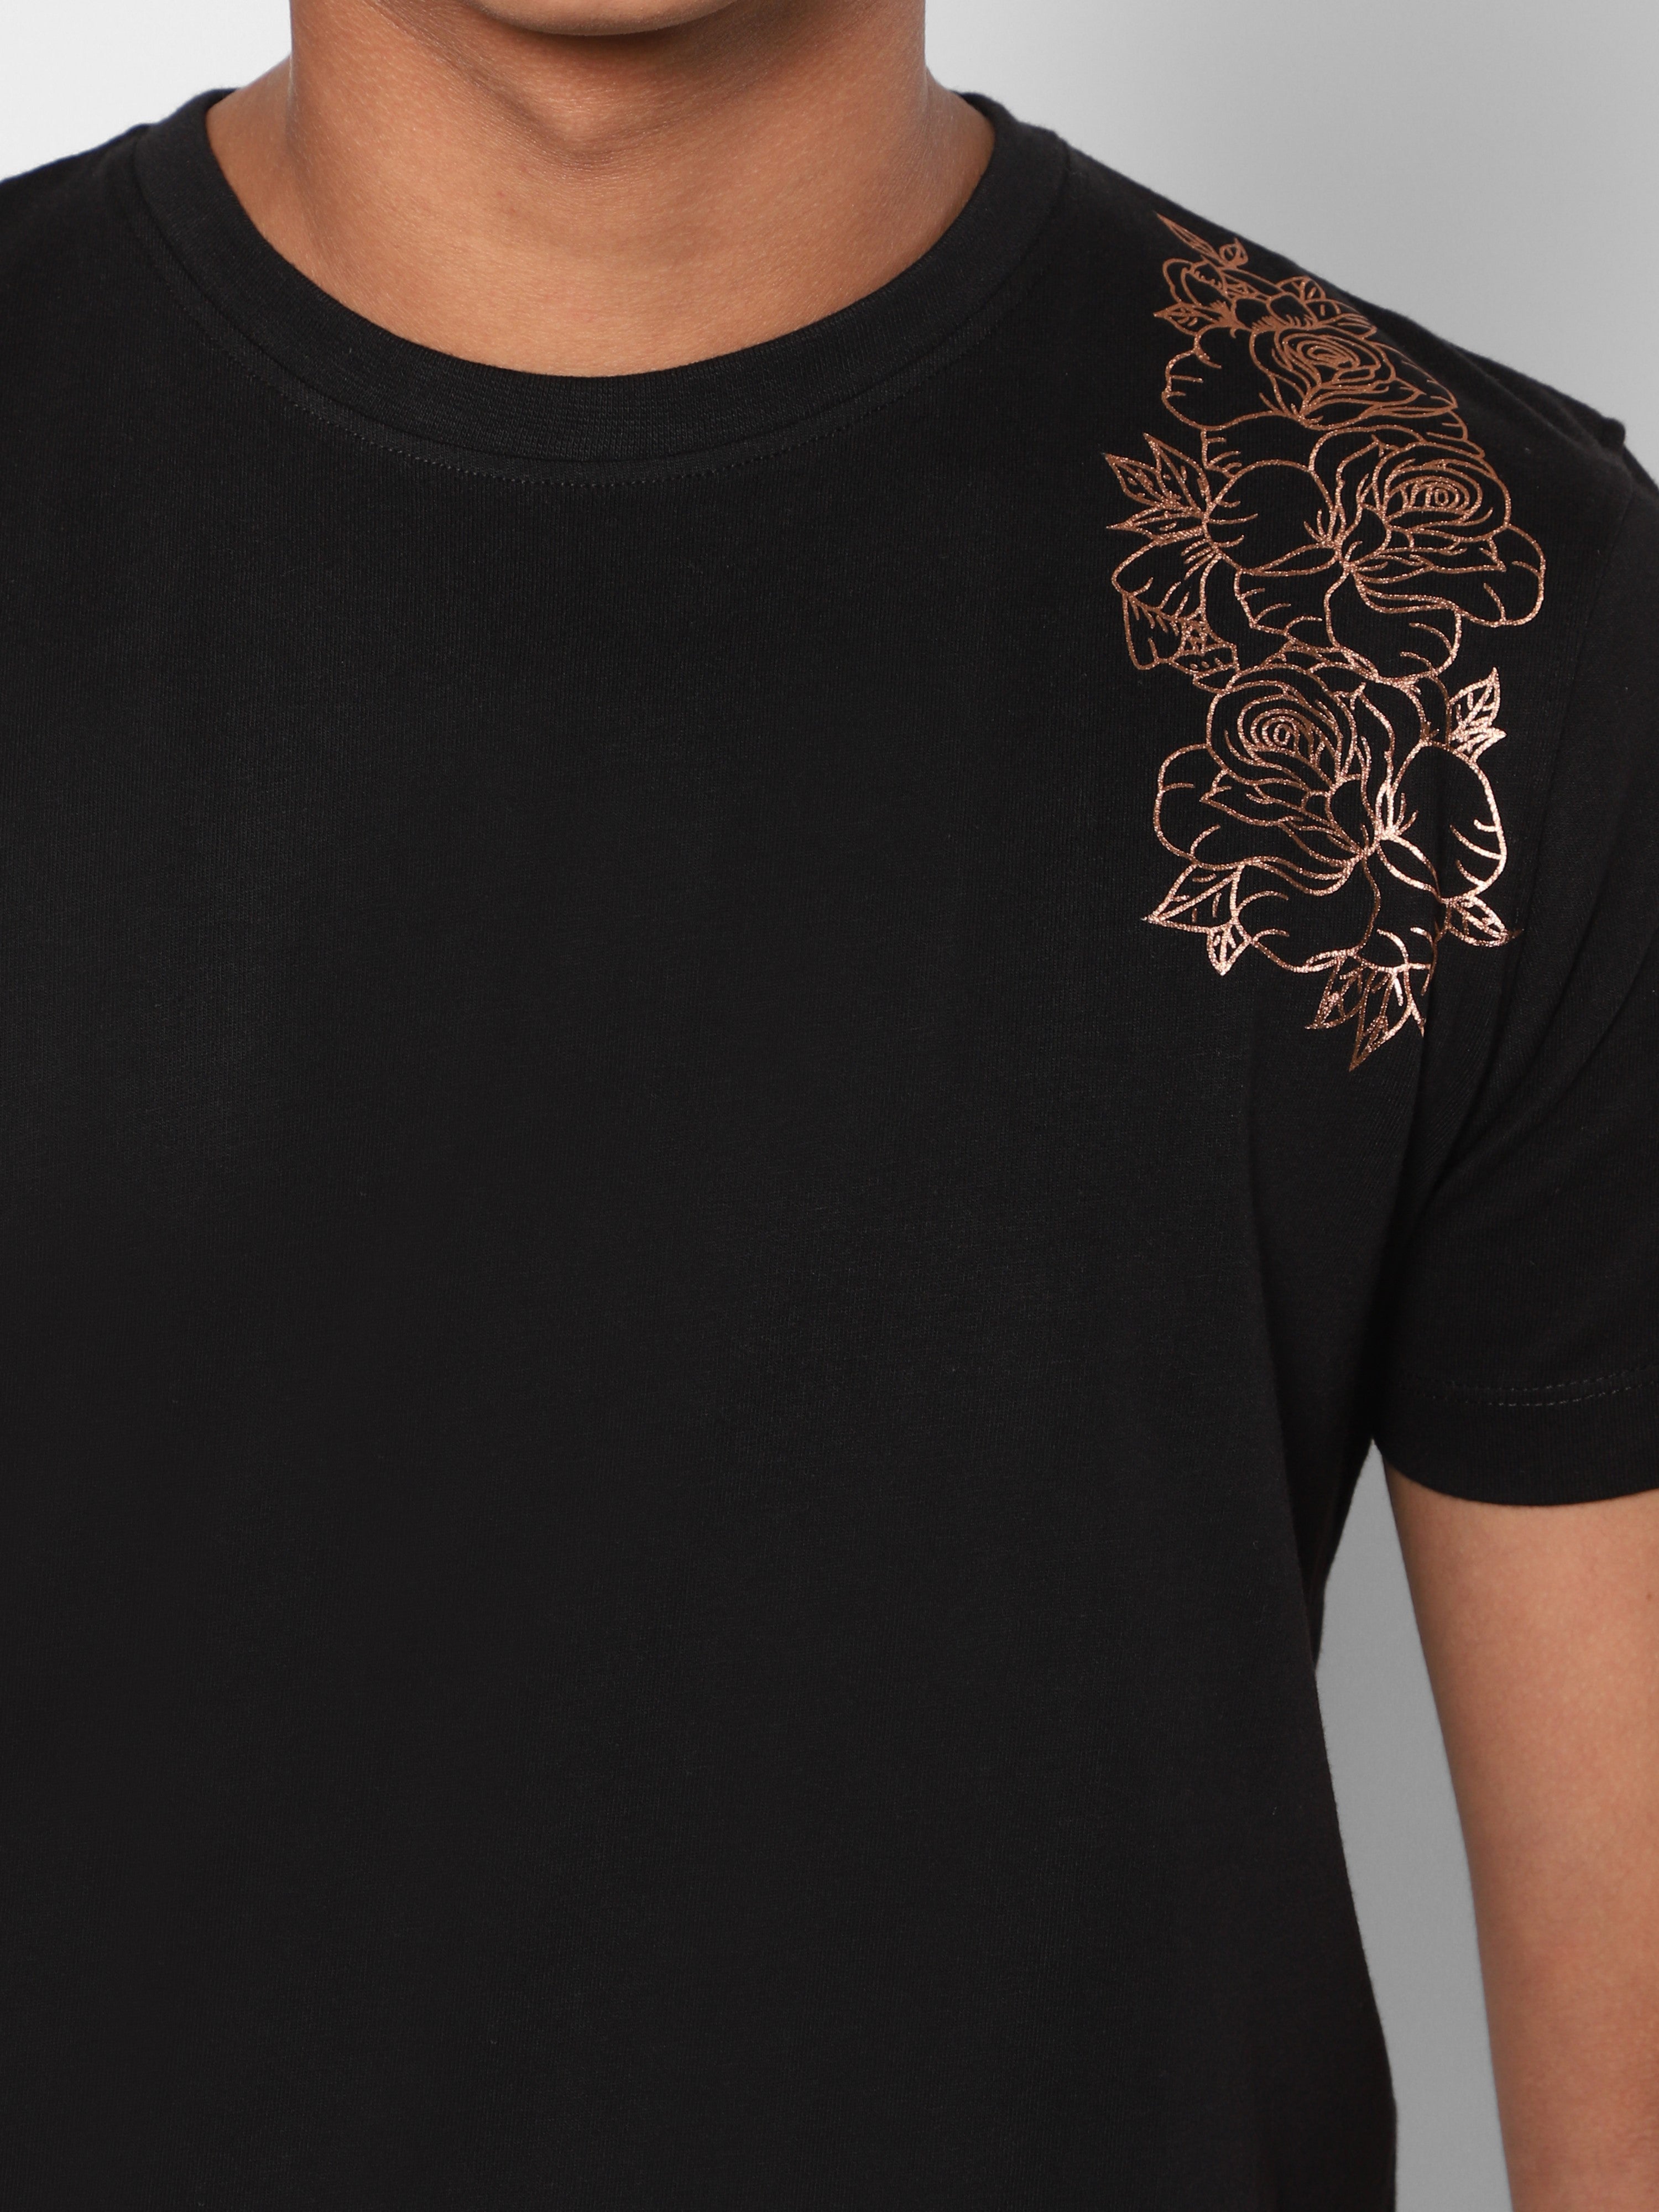 TeenTrums Regular Boys Graphic T-shirt Rose foil print- Black